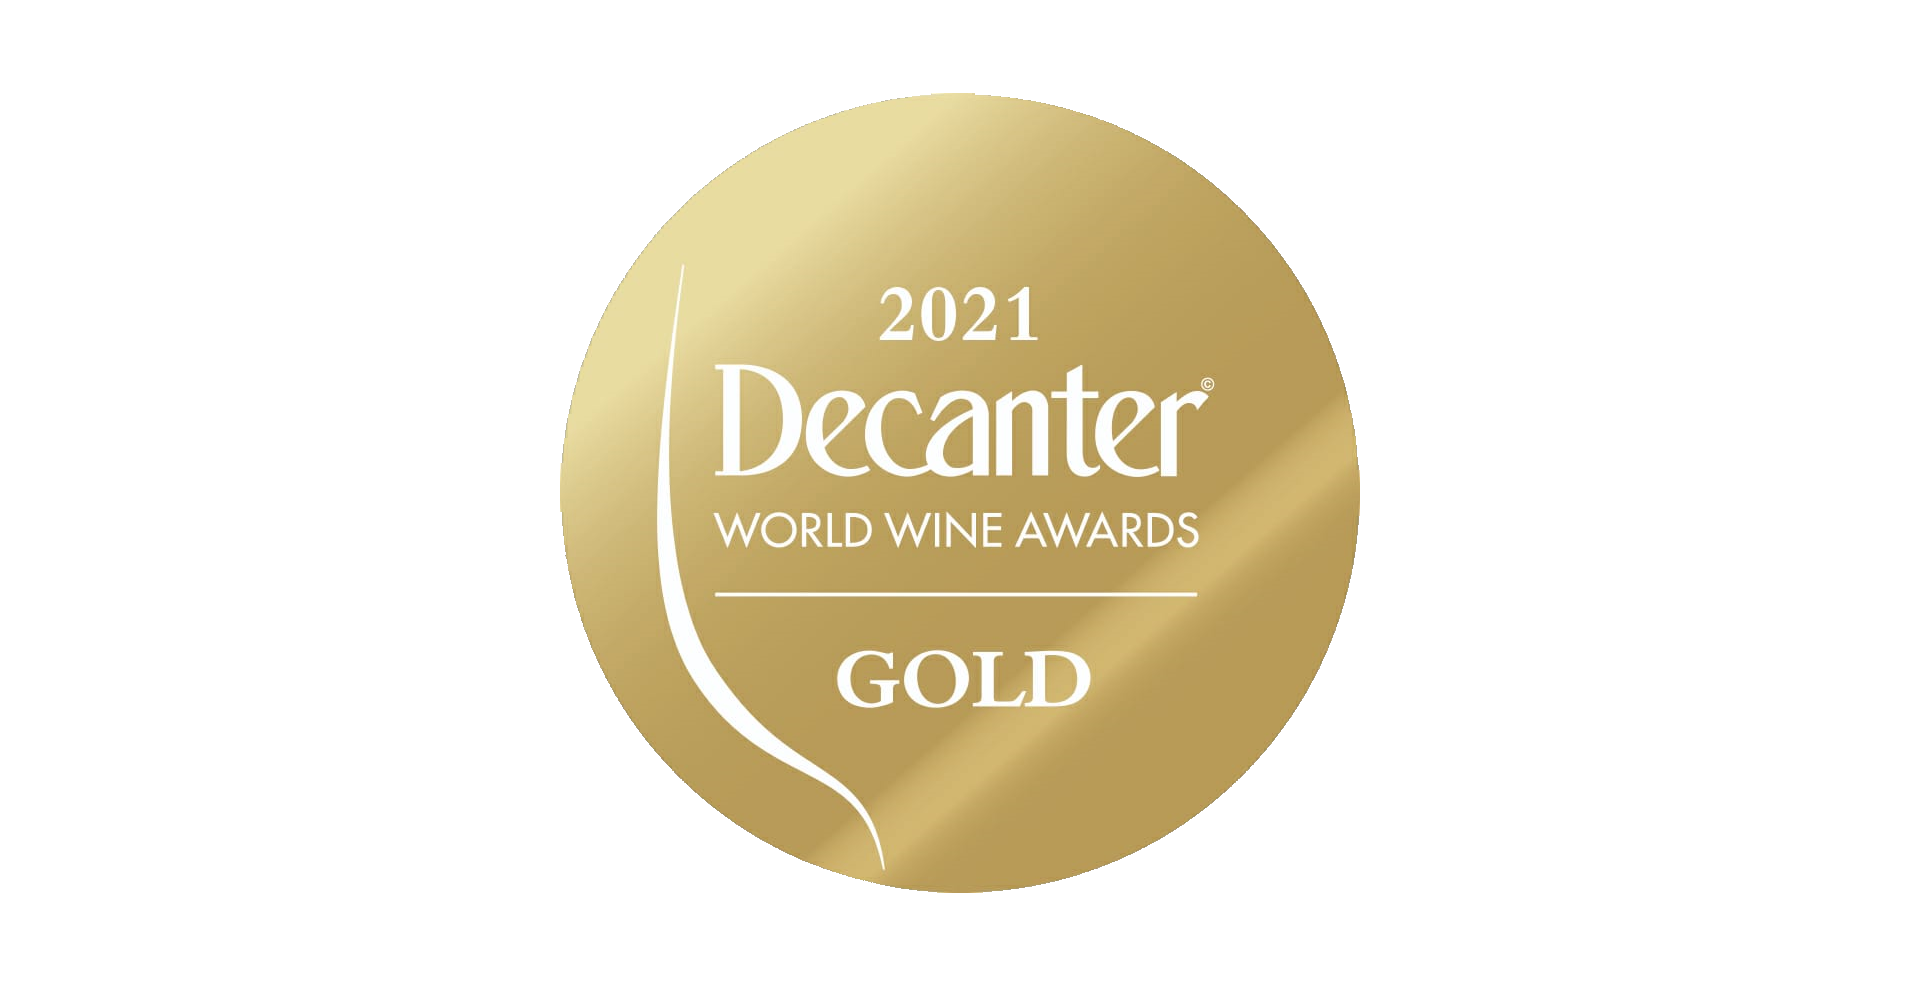  Decanter World Wine Awards